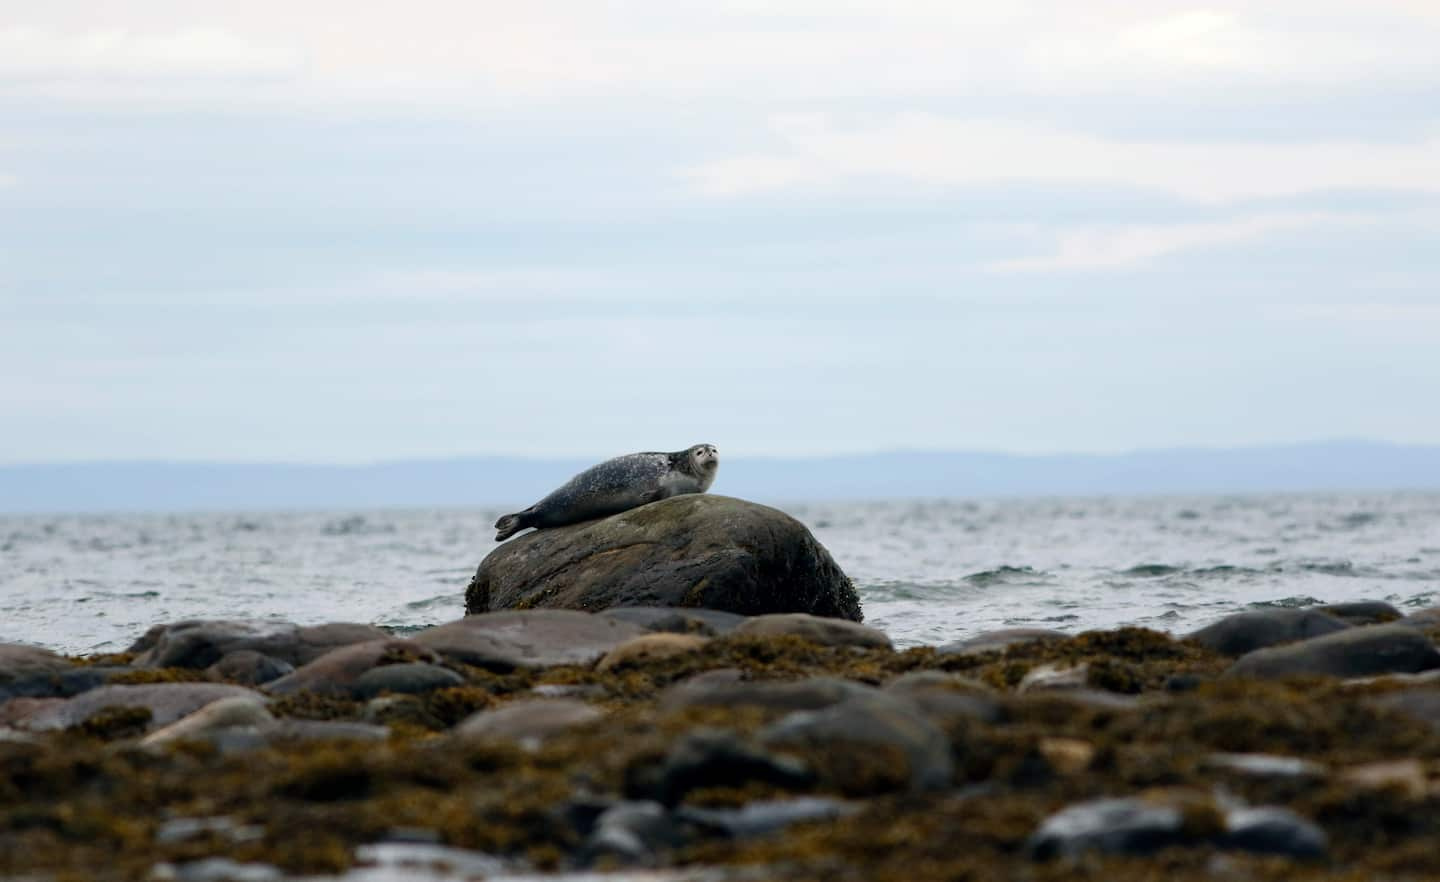 Avian flu affects harbor seals in the Estuary